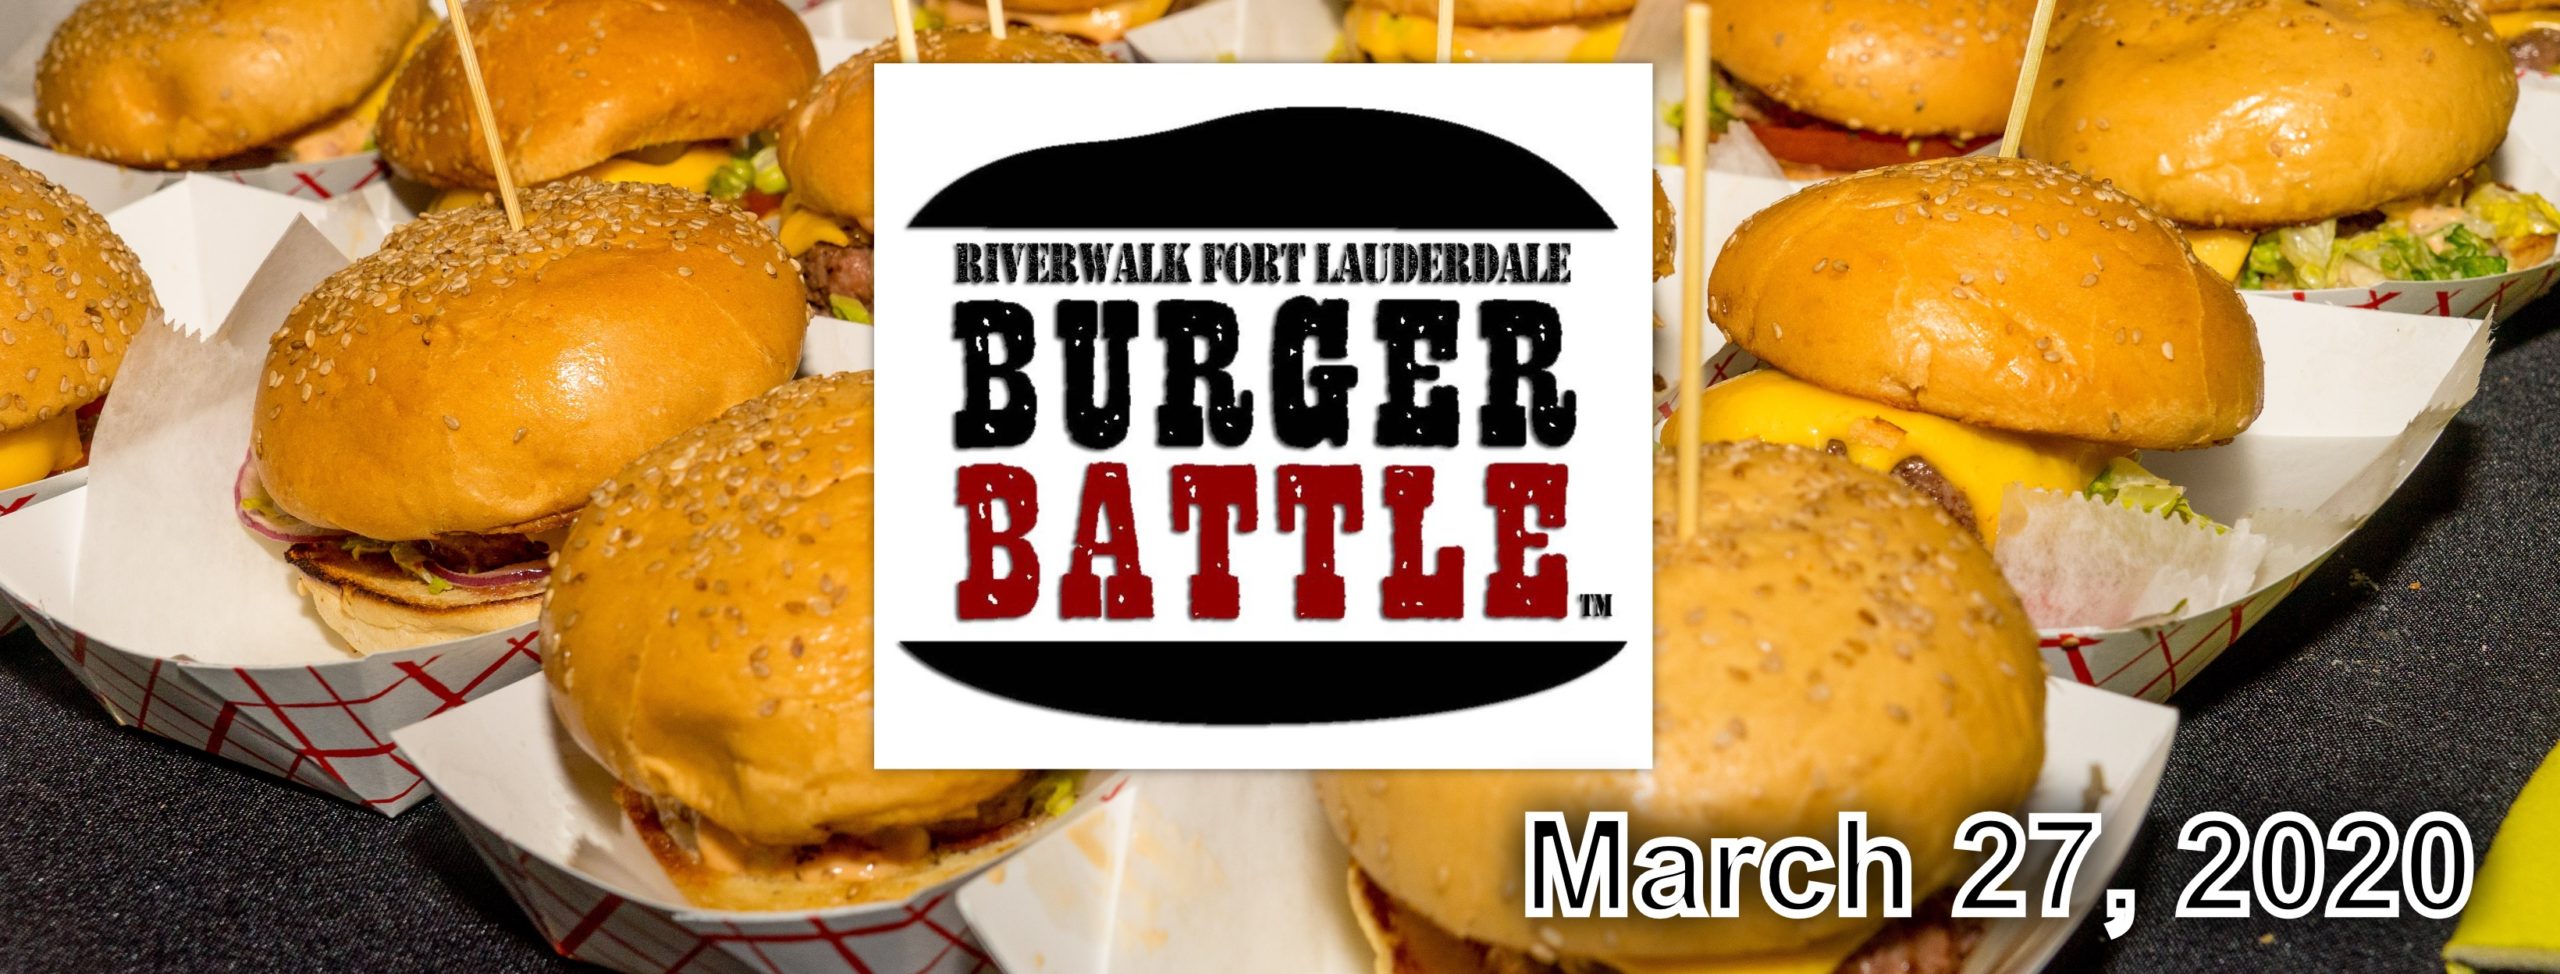 Burger Battle XI 2 Riverwalk Fort Lauderdale